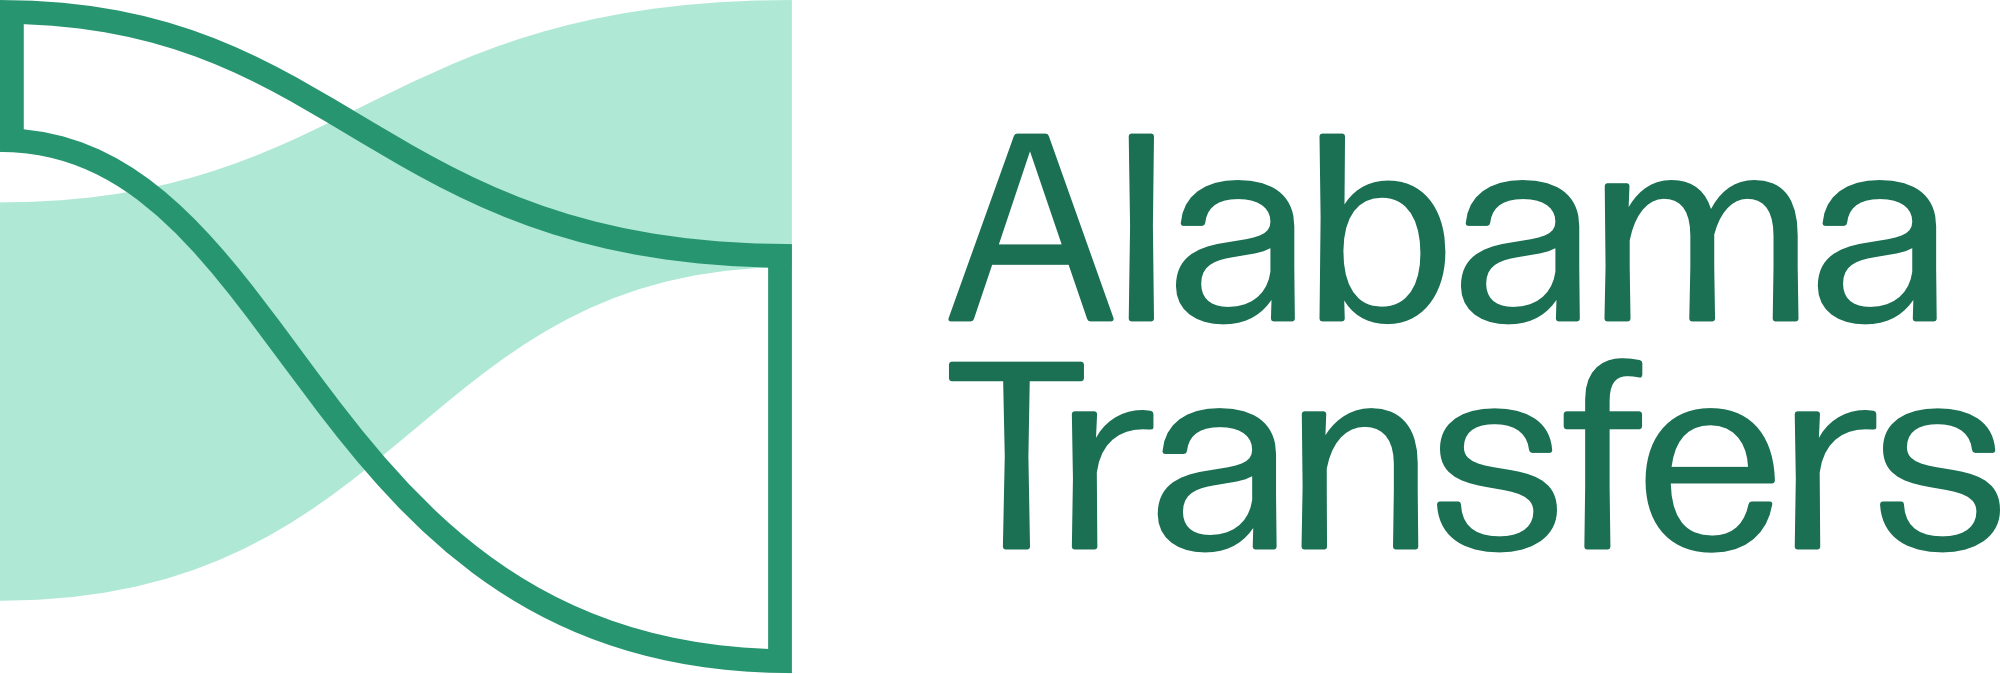 Alabama Transfers